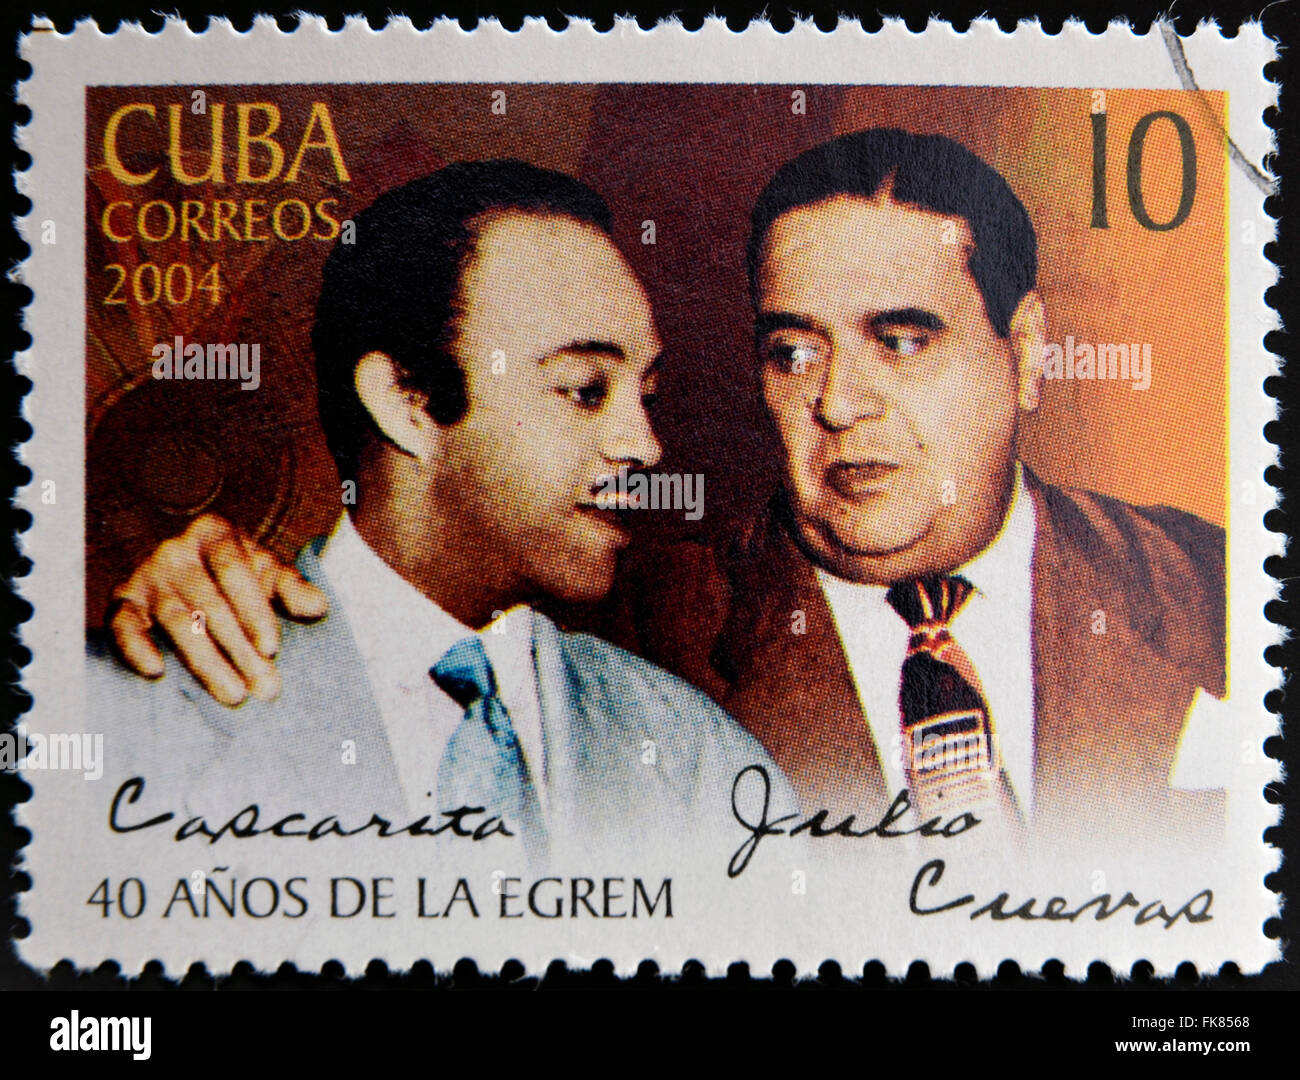 CUBA - circa 2004 : timbre imprimé en Cuba montre Julio Cueva y Orlando Guerra, Cascarita, vers 2004 Banque D'Images